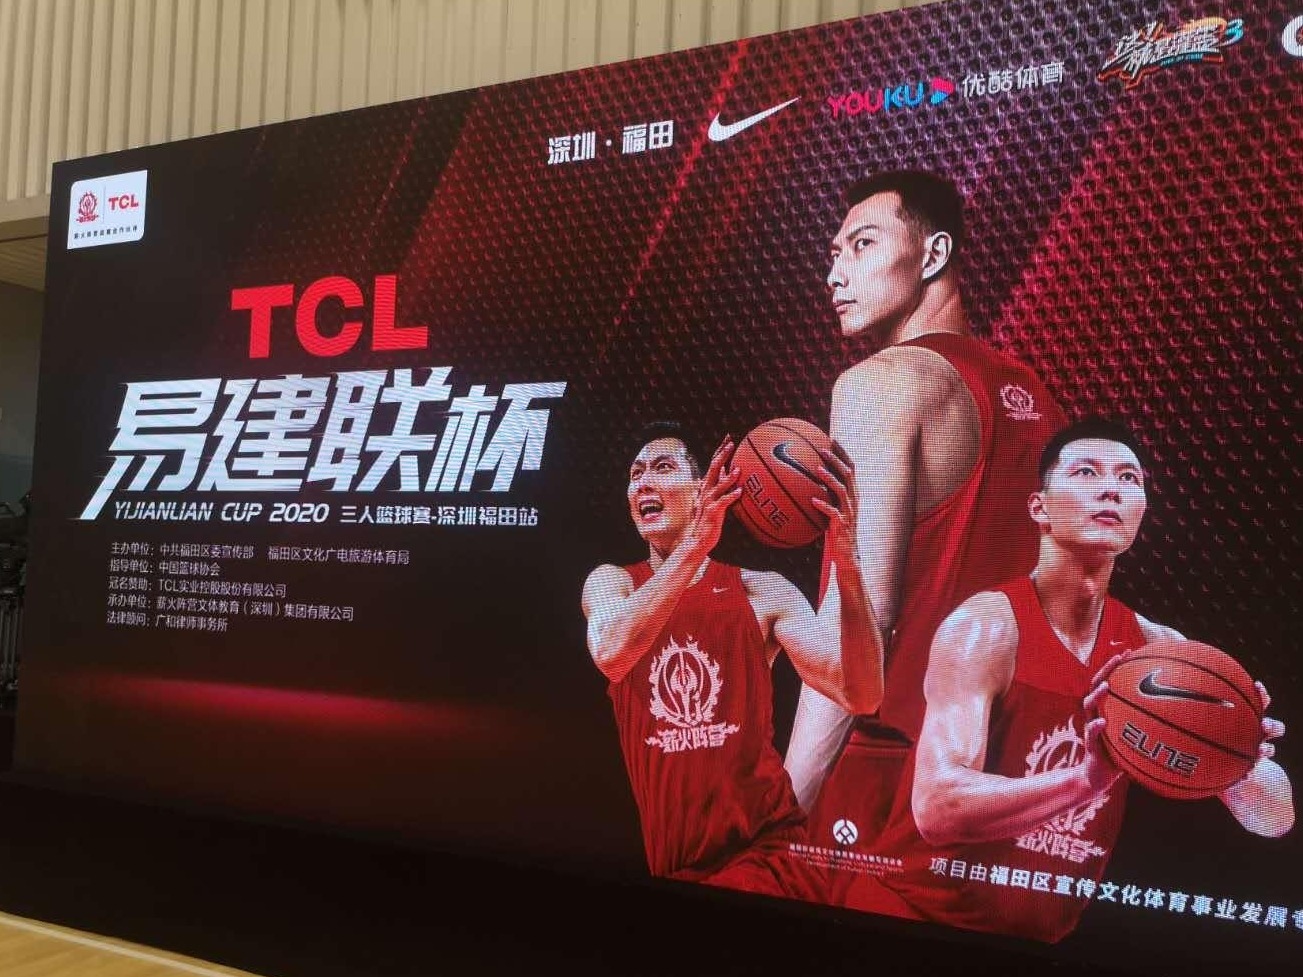 “TCL易建联杯”三人篮球赛揭幕  